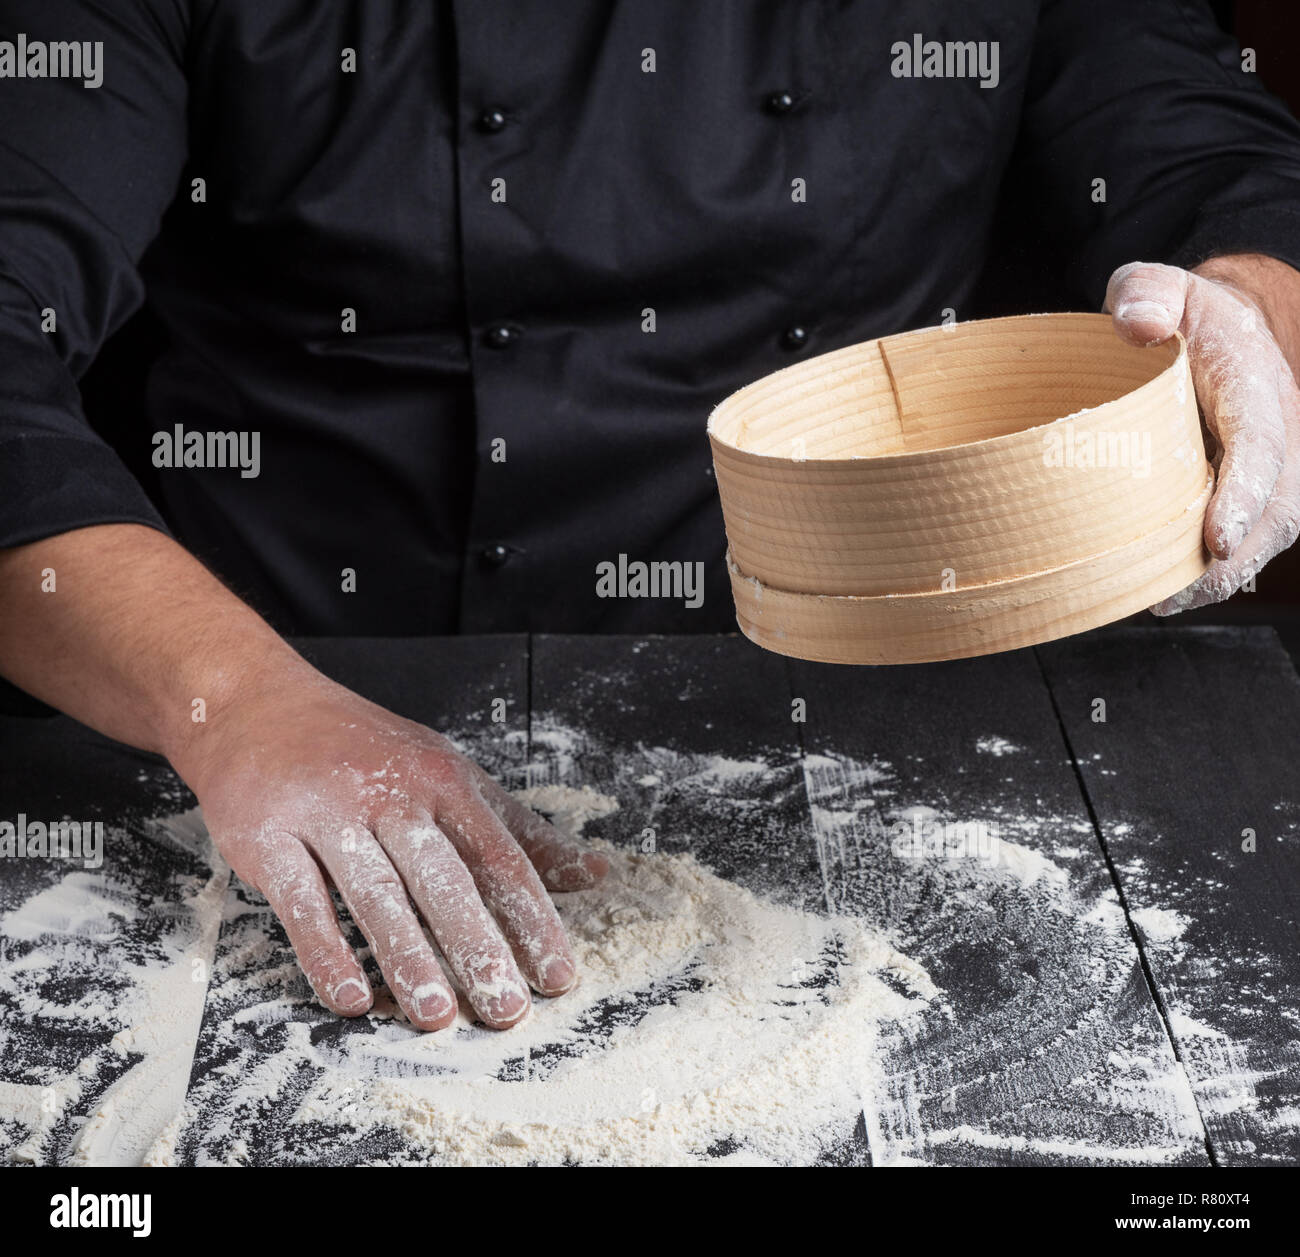 https://c8.alamy.com/comp/R80XT4/chef-prepares-the-dough-of-white-flour-in-your-hand-round-wooden-sieve-R80XT4.jpg